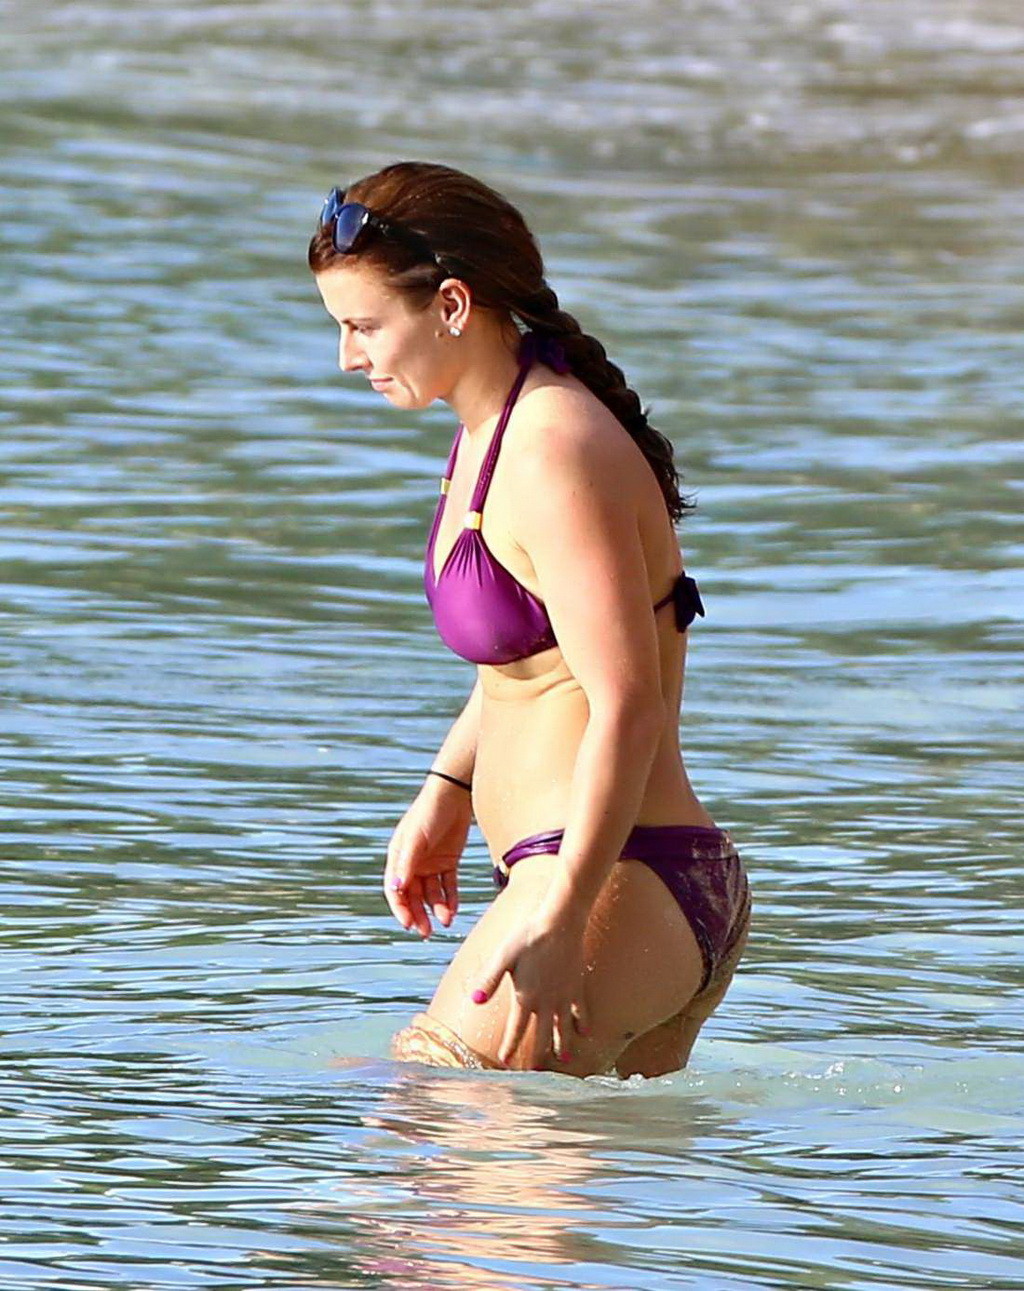 Coleen rooney portant un bikini violet à la plage de la Barbade
 #75182443